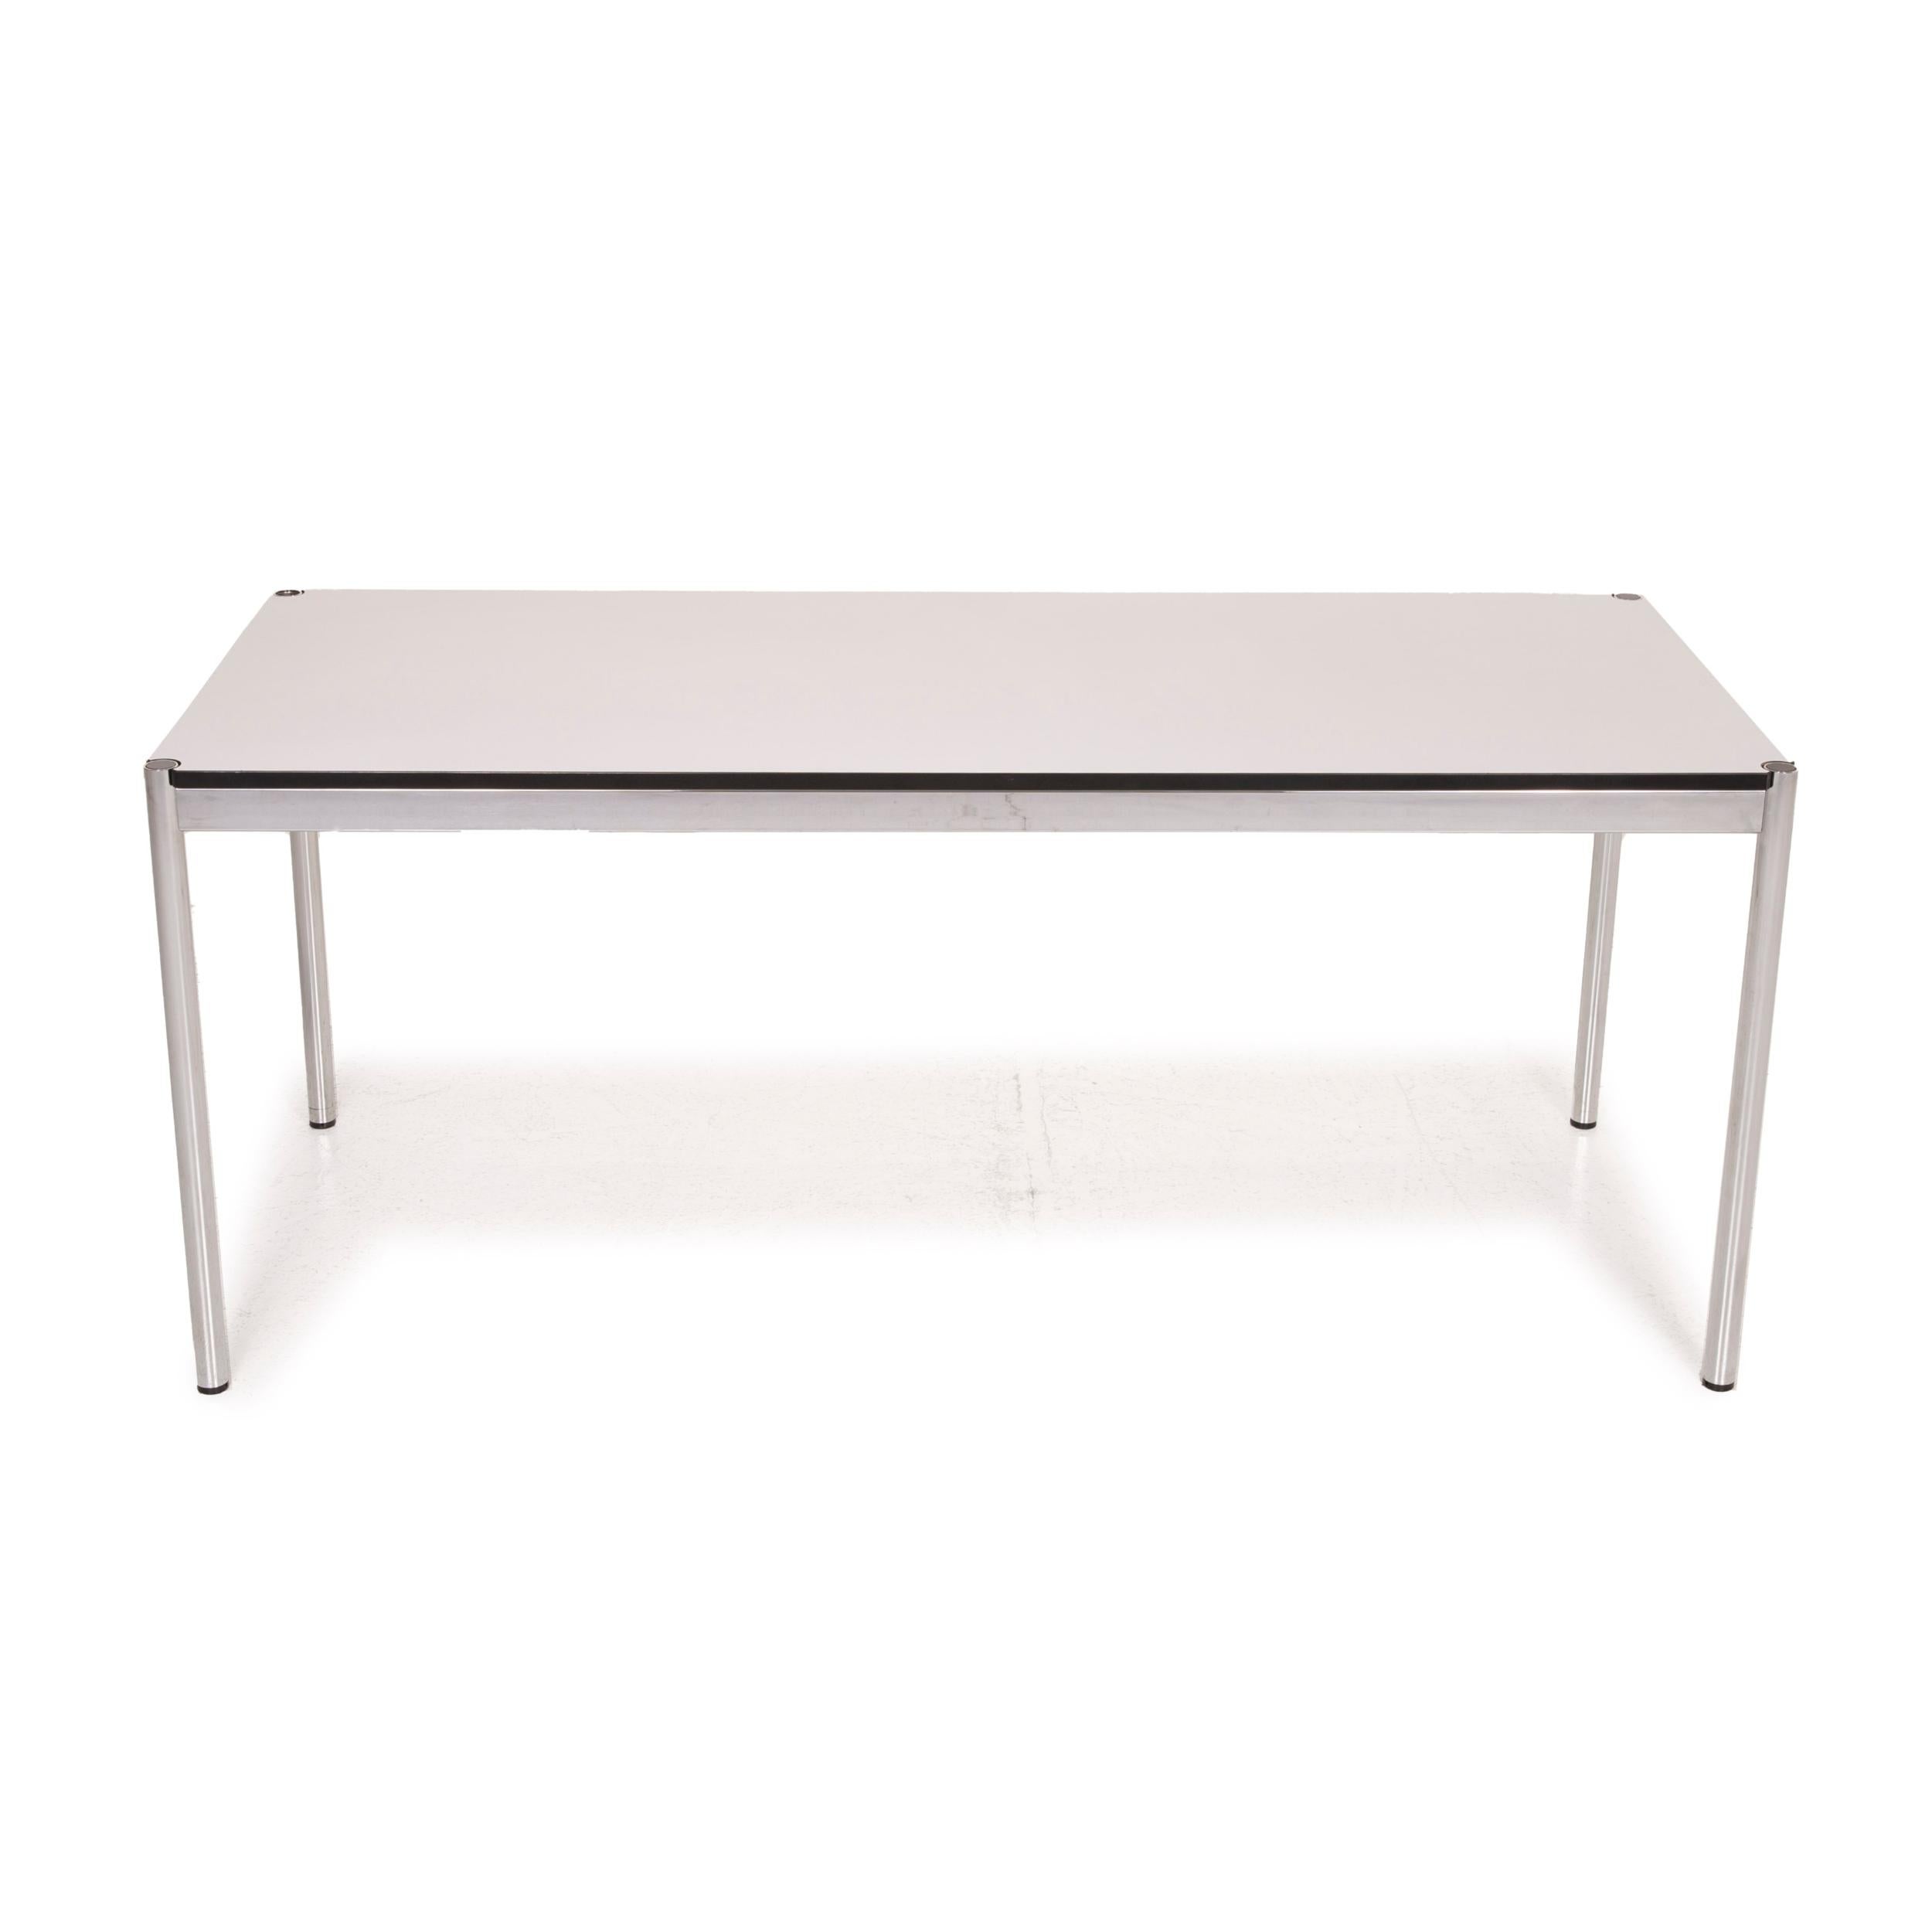 USM Haller Metal Table White Desk Chrome For Sale 1